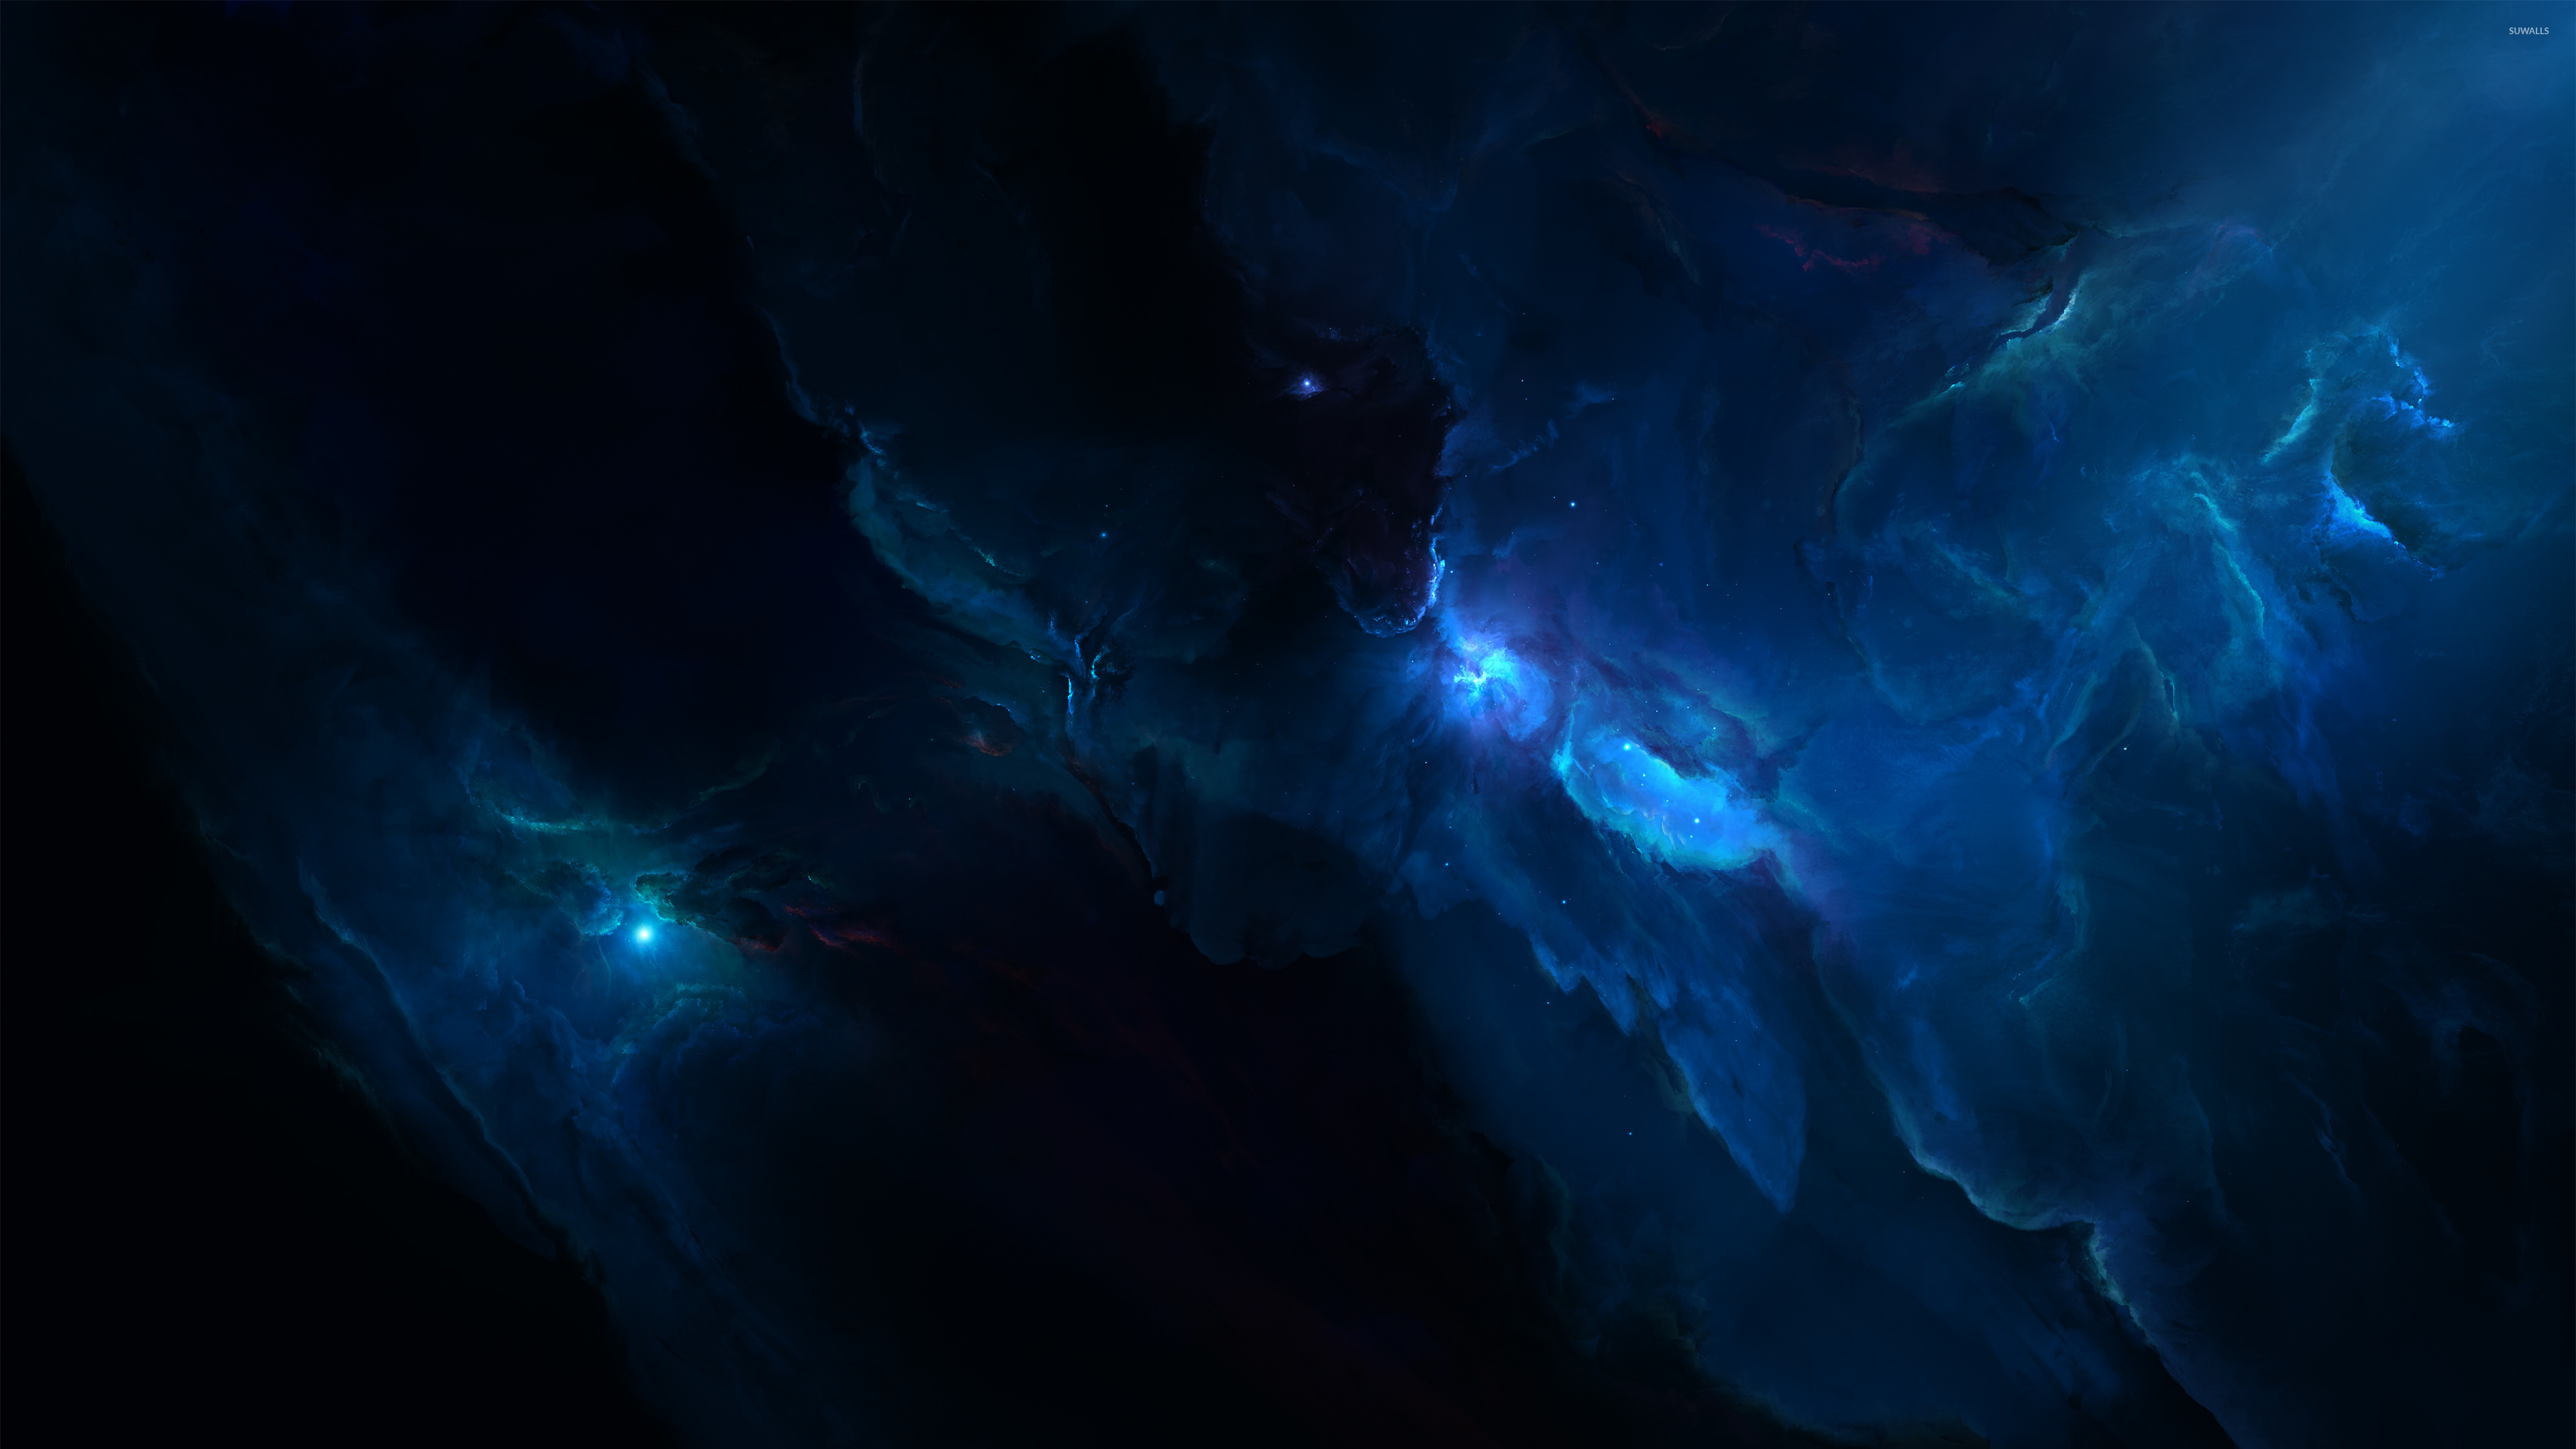 Blue Nebula Wallpaper Space